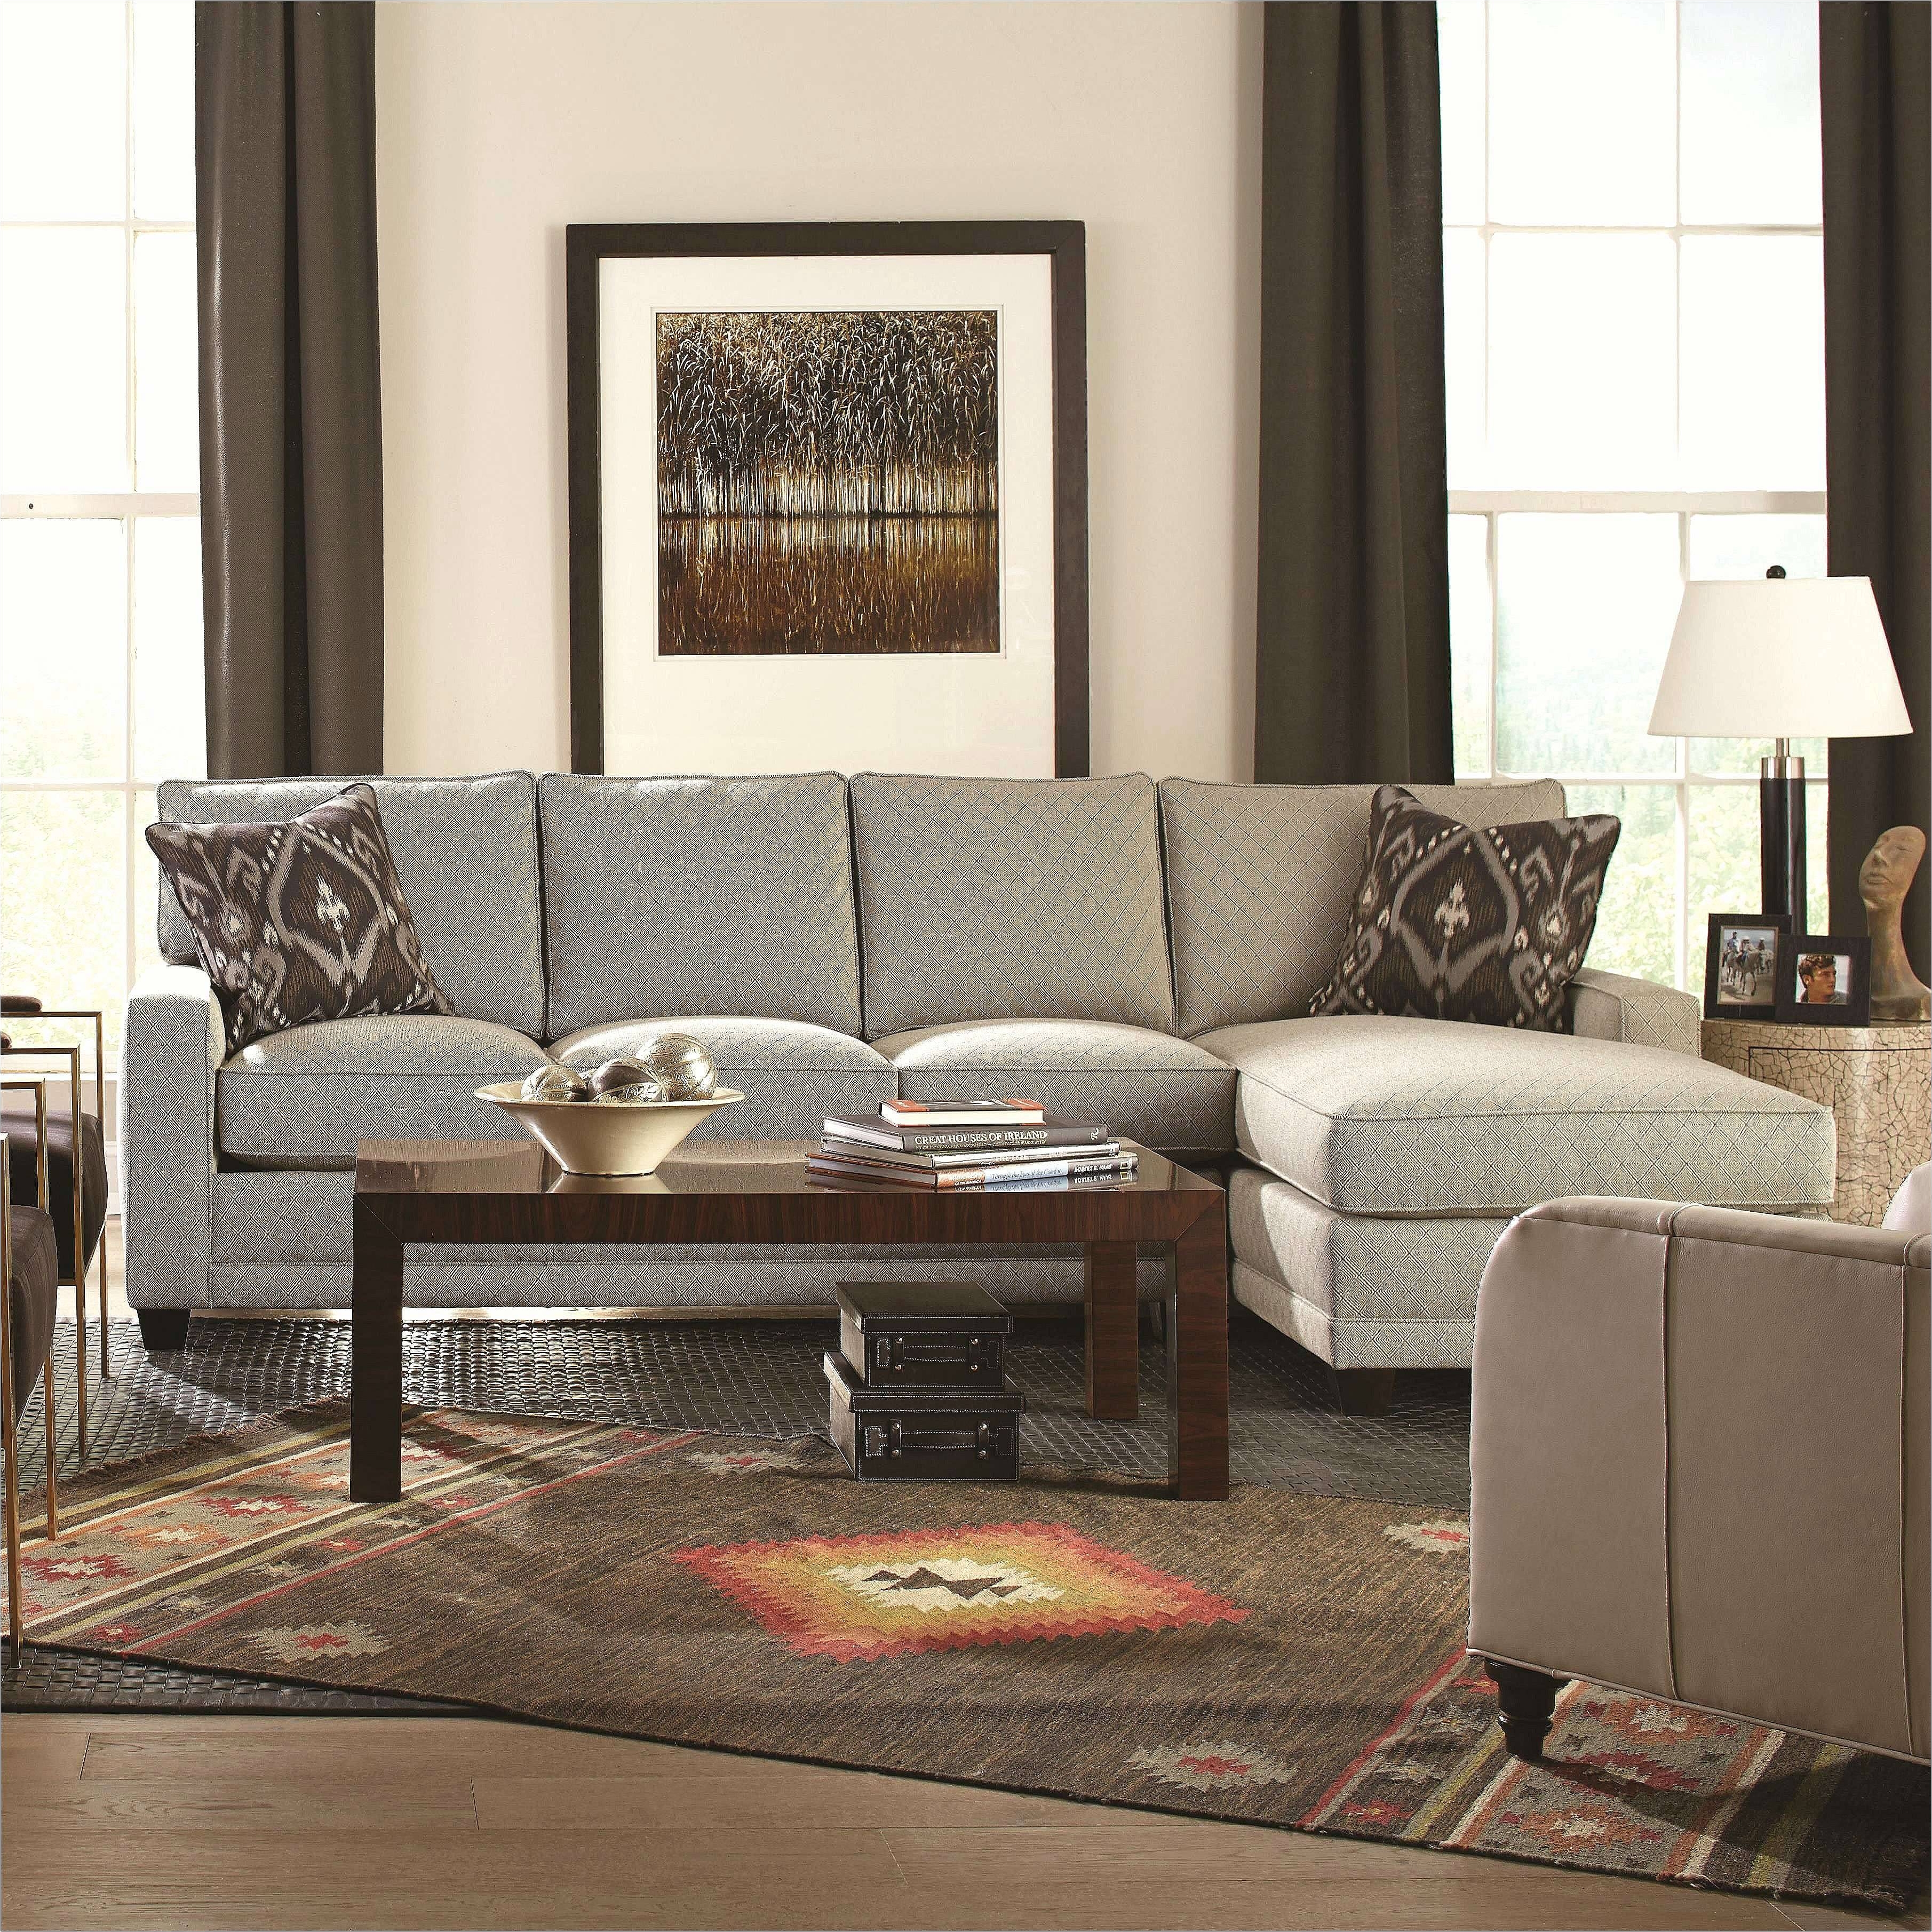 rustic living room furniture elegant modern living room furniture new gunstige sofa macys furniture 0d